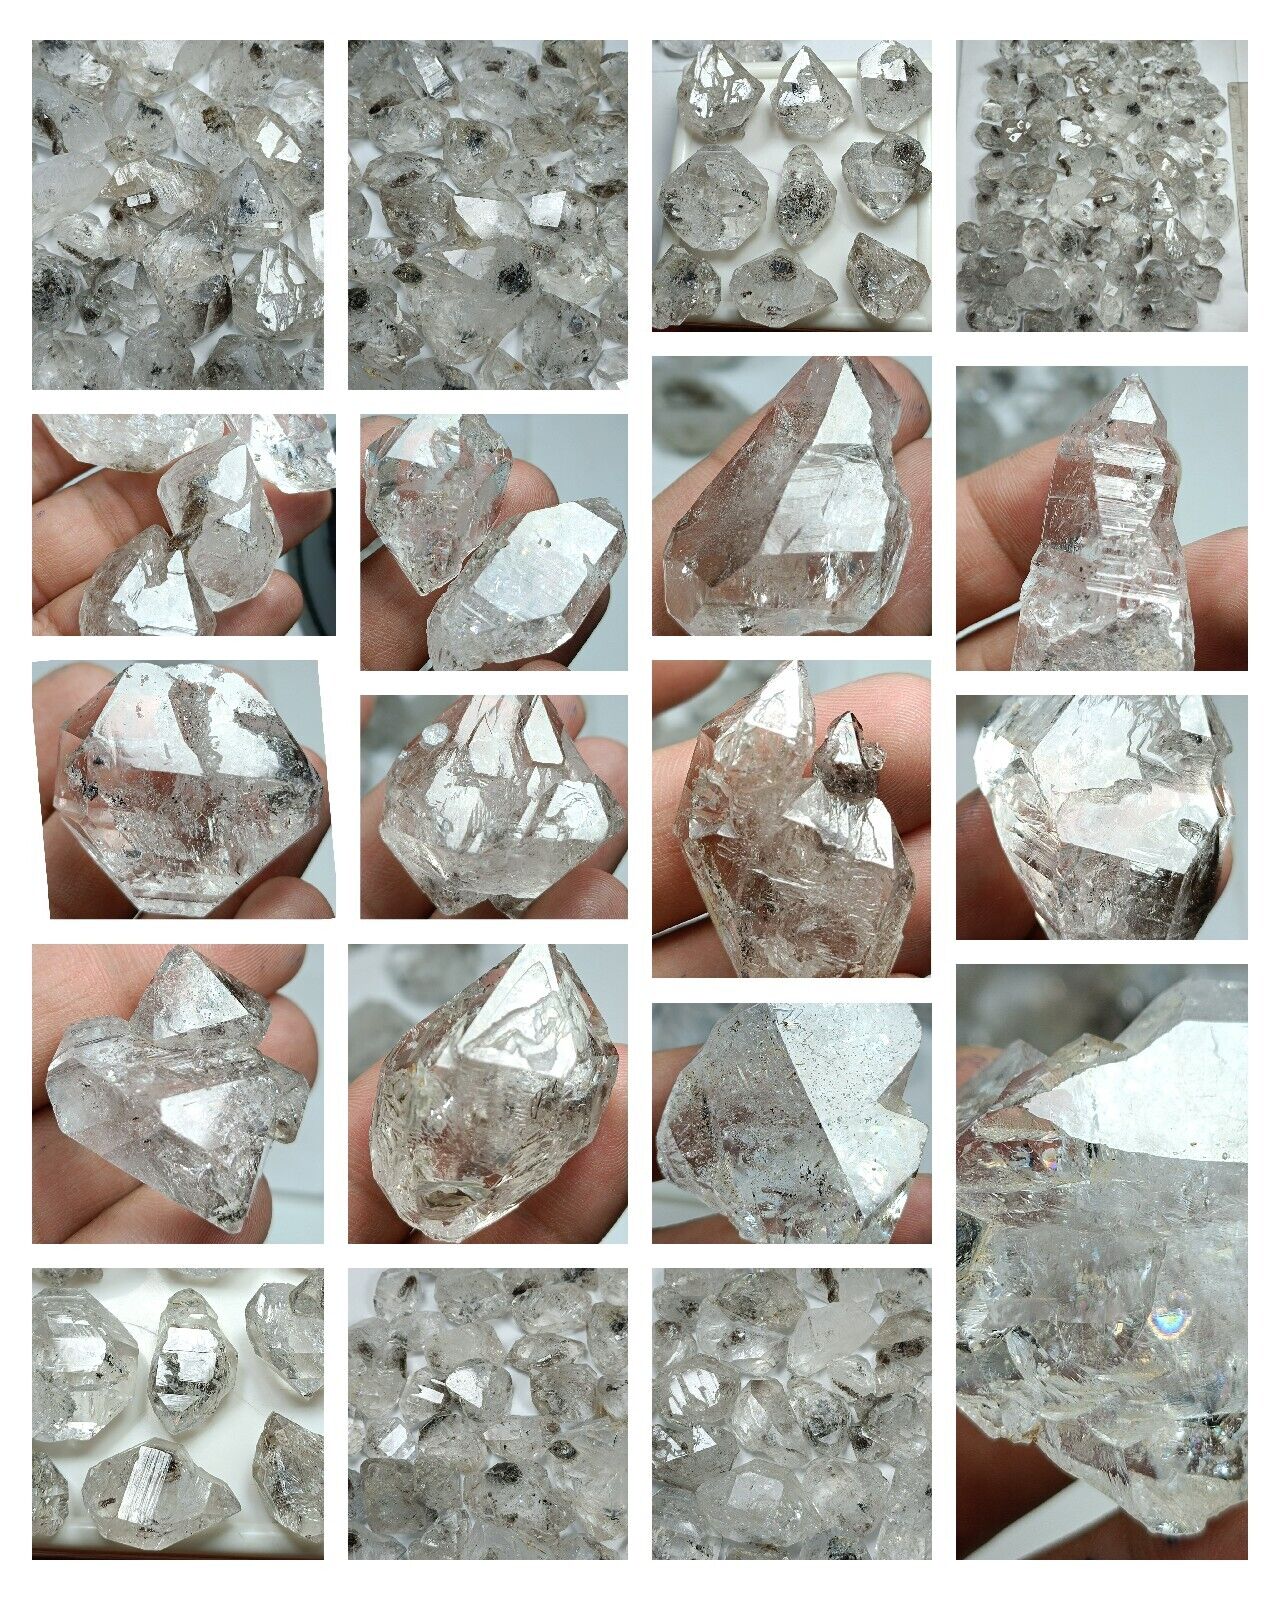 5-KG Nice Quality Diamond Quartz DT Crystals Lot from Balochistan, Pakistan.